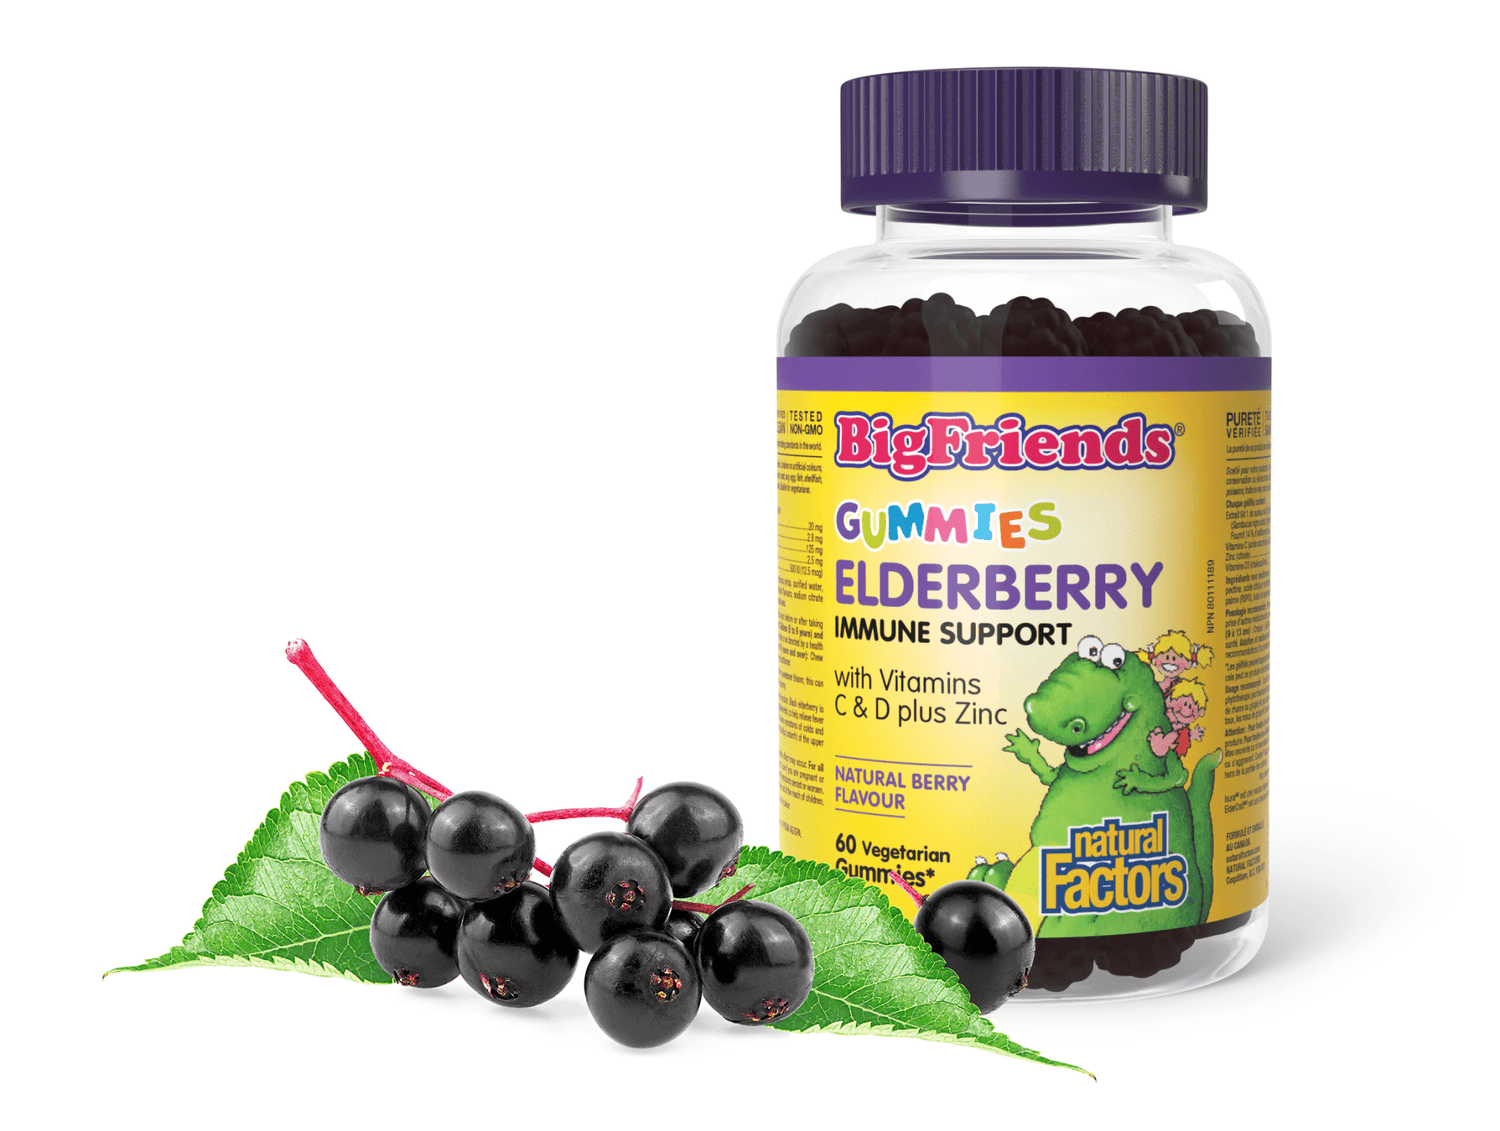 Elderberry Gummies with Vitamins C & D plus Zinc, Natural Factors|v|image|4709